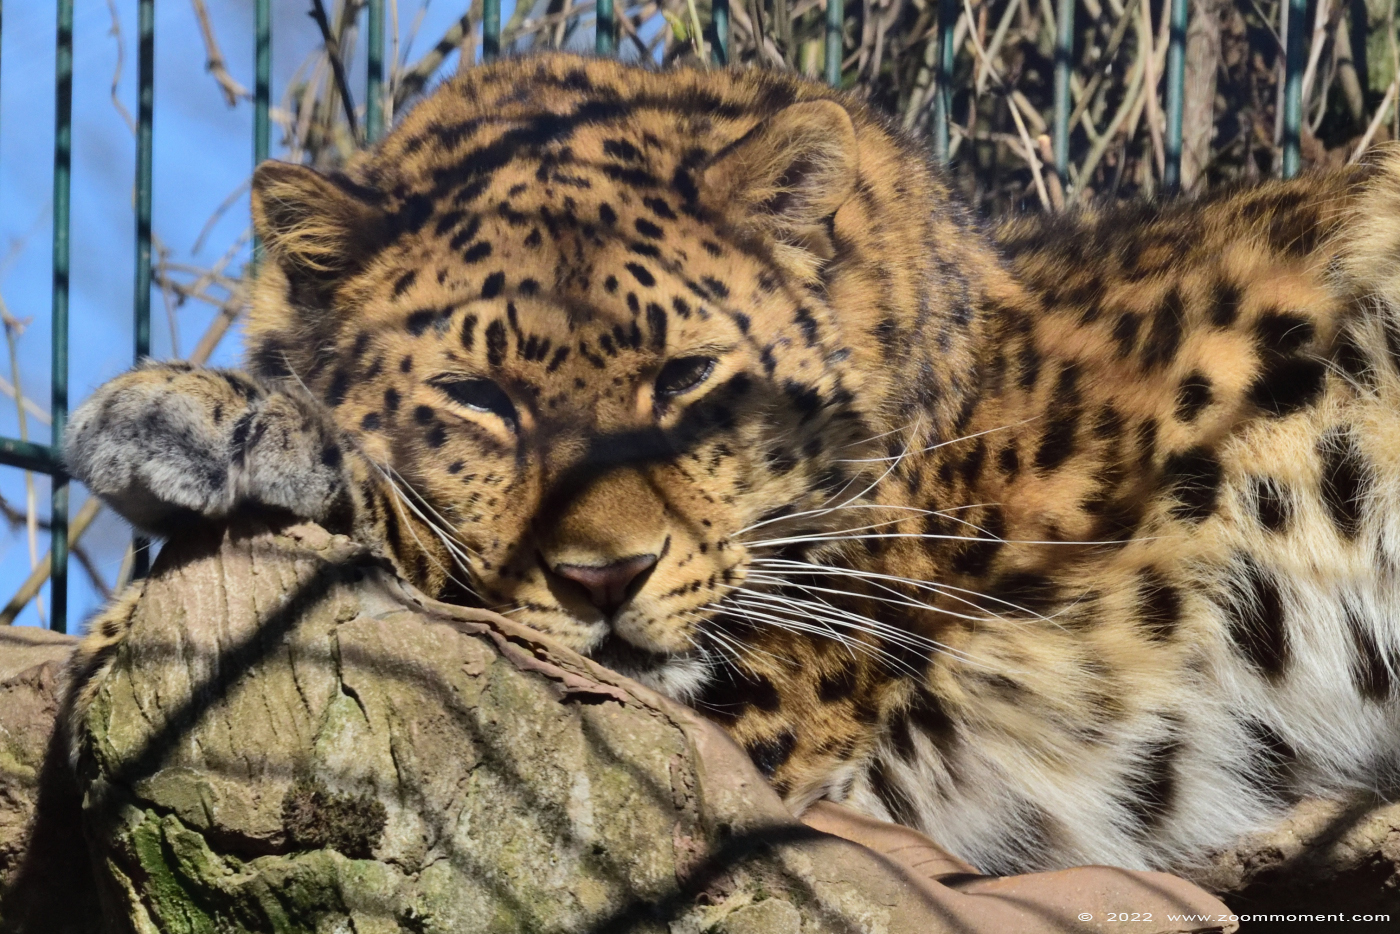 amoerpanter ( Panthera pardus orientalis ) amur leopard
Avainsanat: Monde Sauvage Belgium amoerpanter Panthera pardus orientalis amur leopard